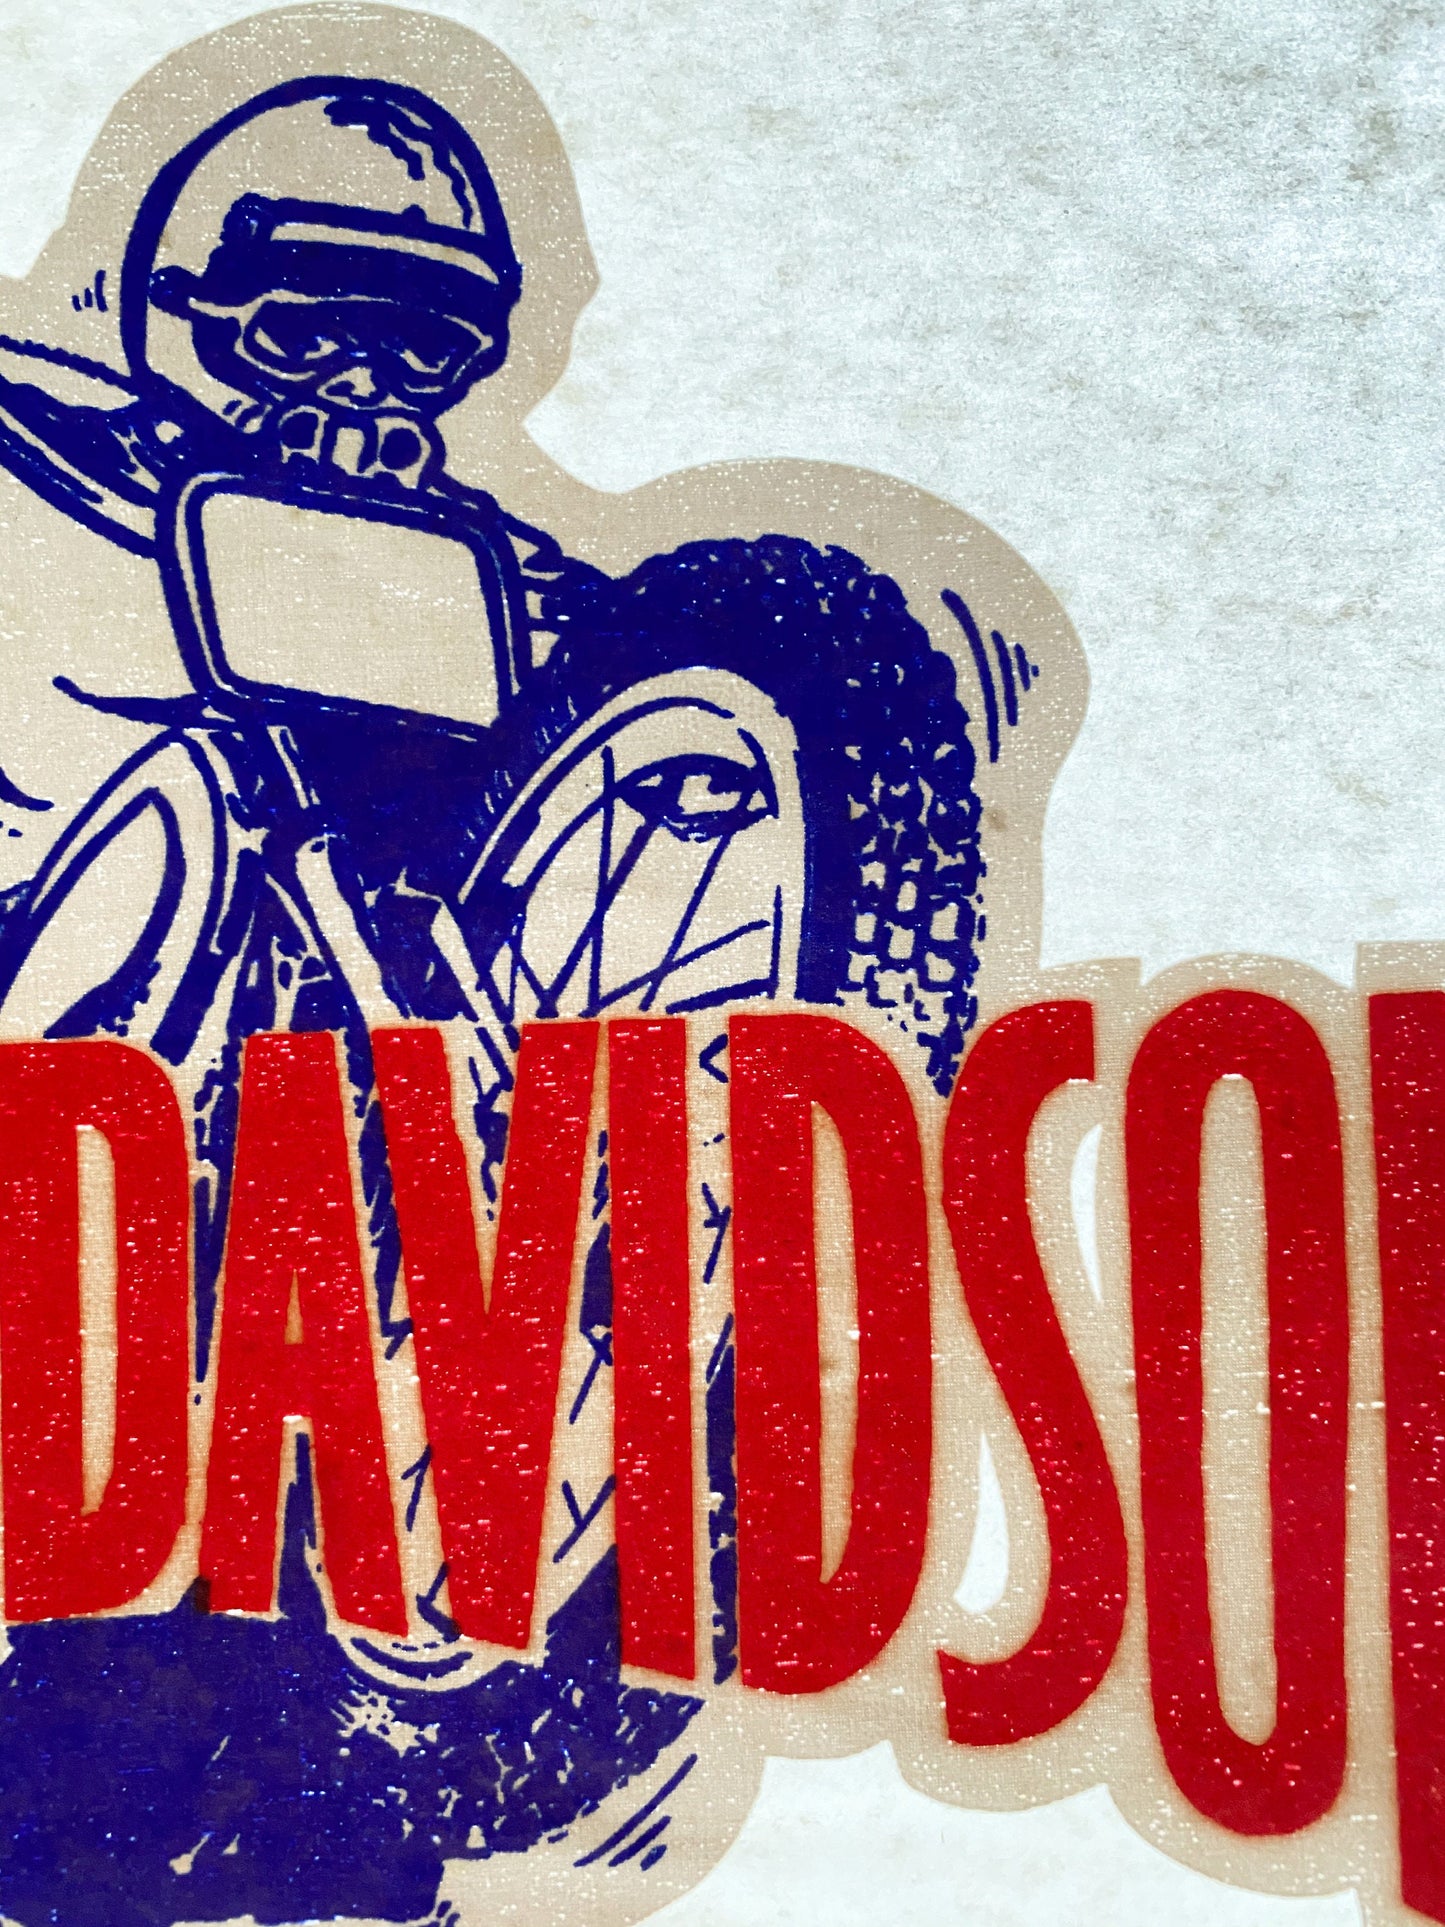 Harley Davidson Vintage Rat's Hole Iron On Heat Transfer